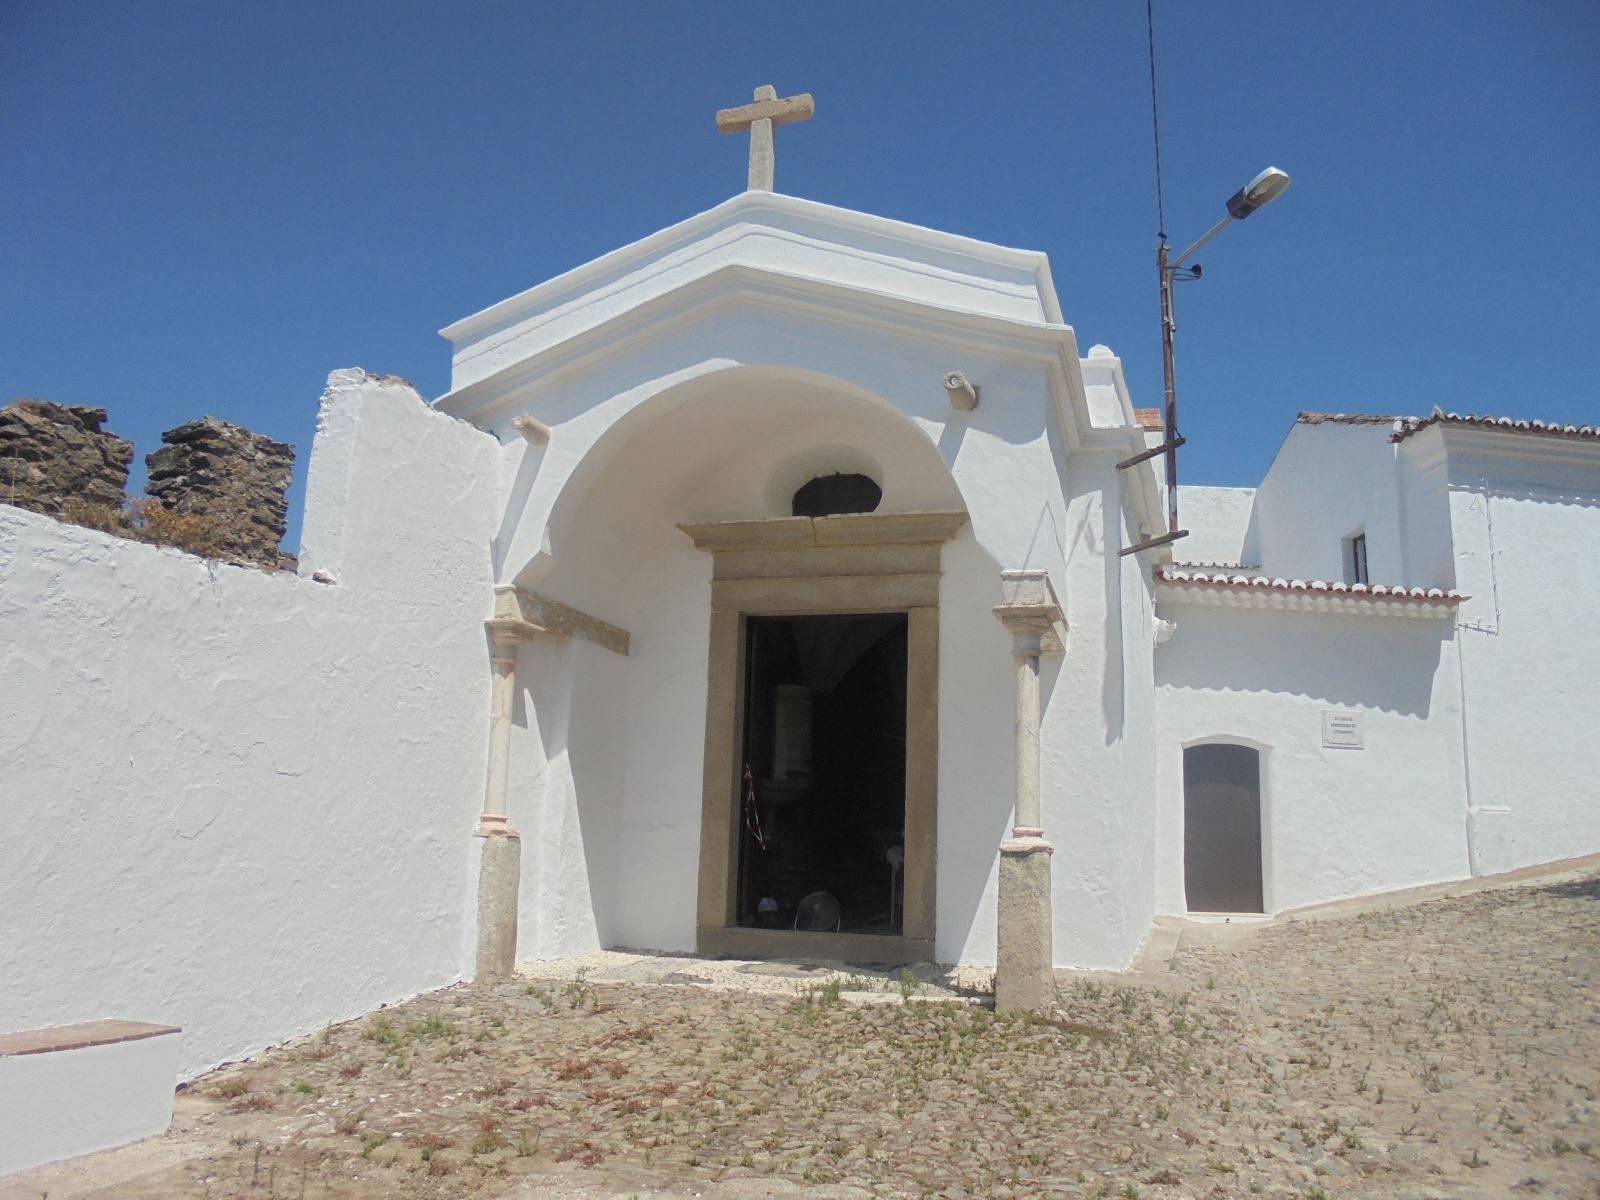 Património | Evoramonte promove conservação e restauro da igreja